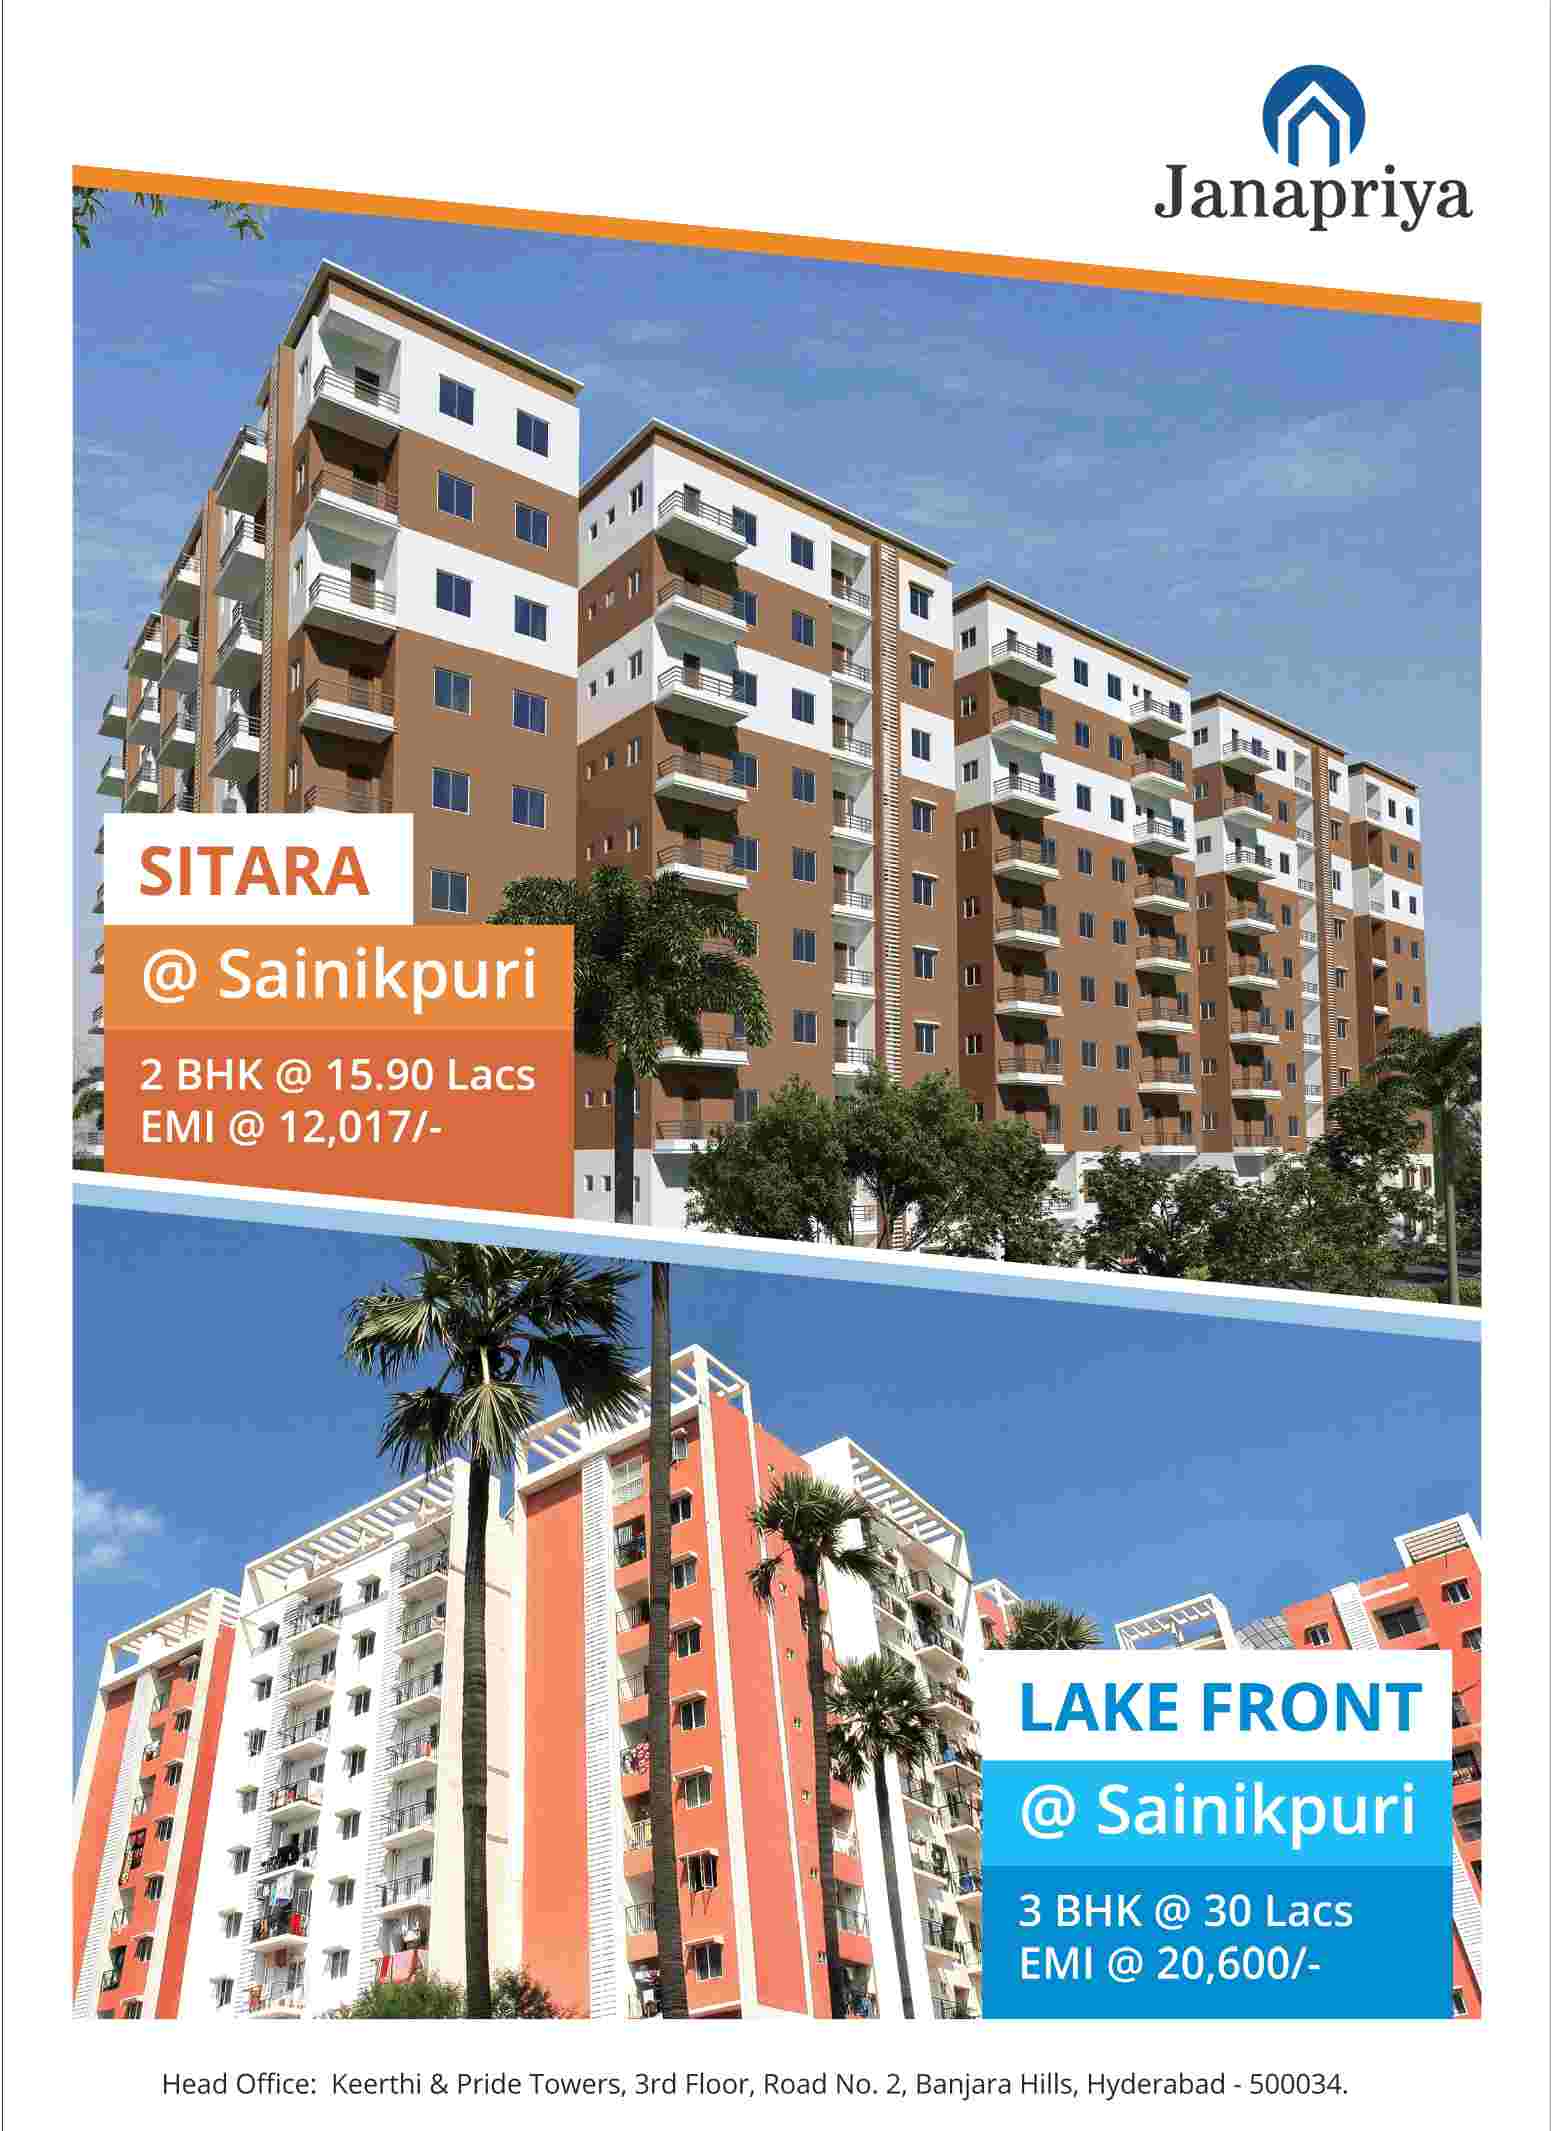 Invest at Janapriya properties in Hyderabad